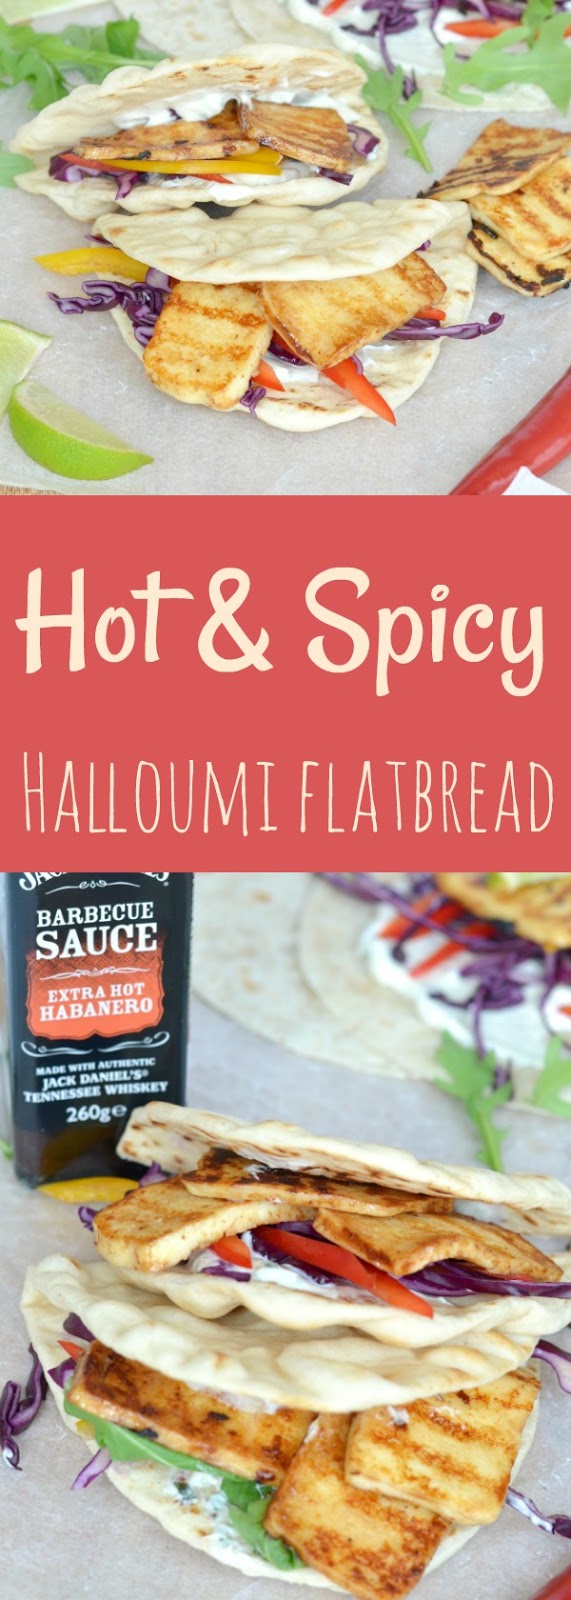 Hot & Spicy Halloumi & Salad filled Flatbread